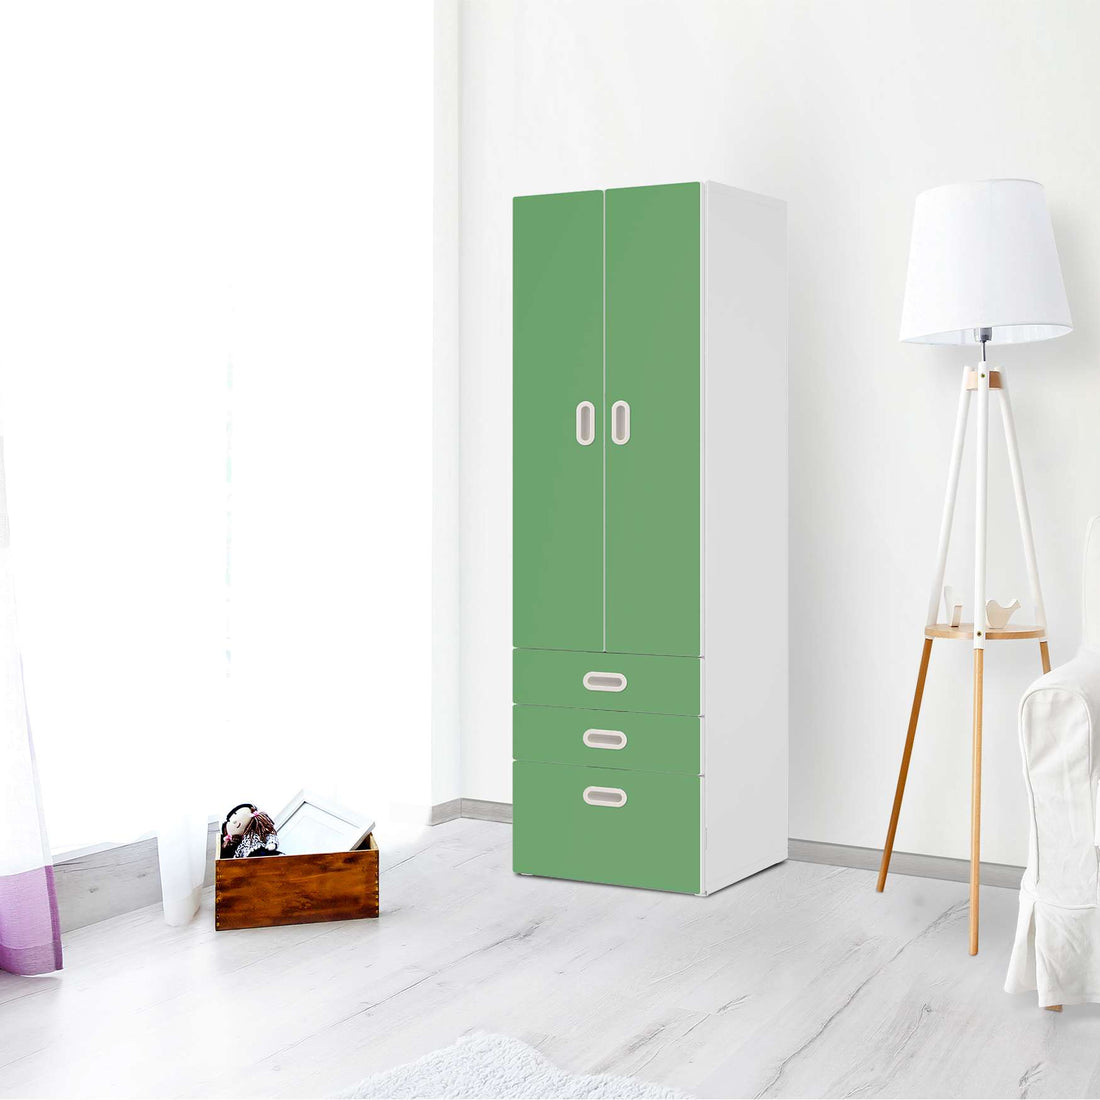 Klebefolie Grün Light - IKEA Stuva / Fritids kombiniert - 3 Schubladen und 2 große Türen - Kinderzimmer